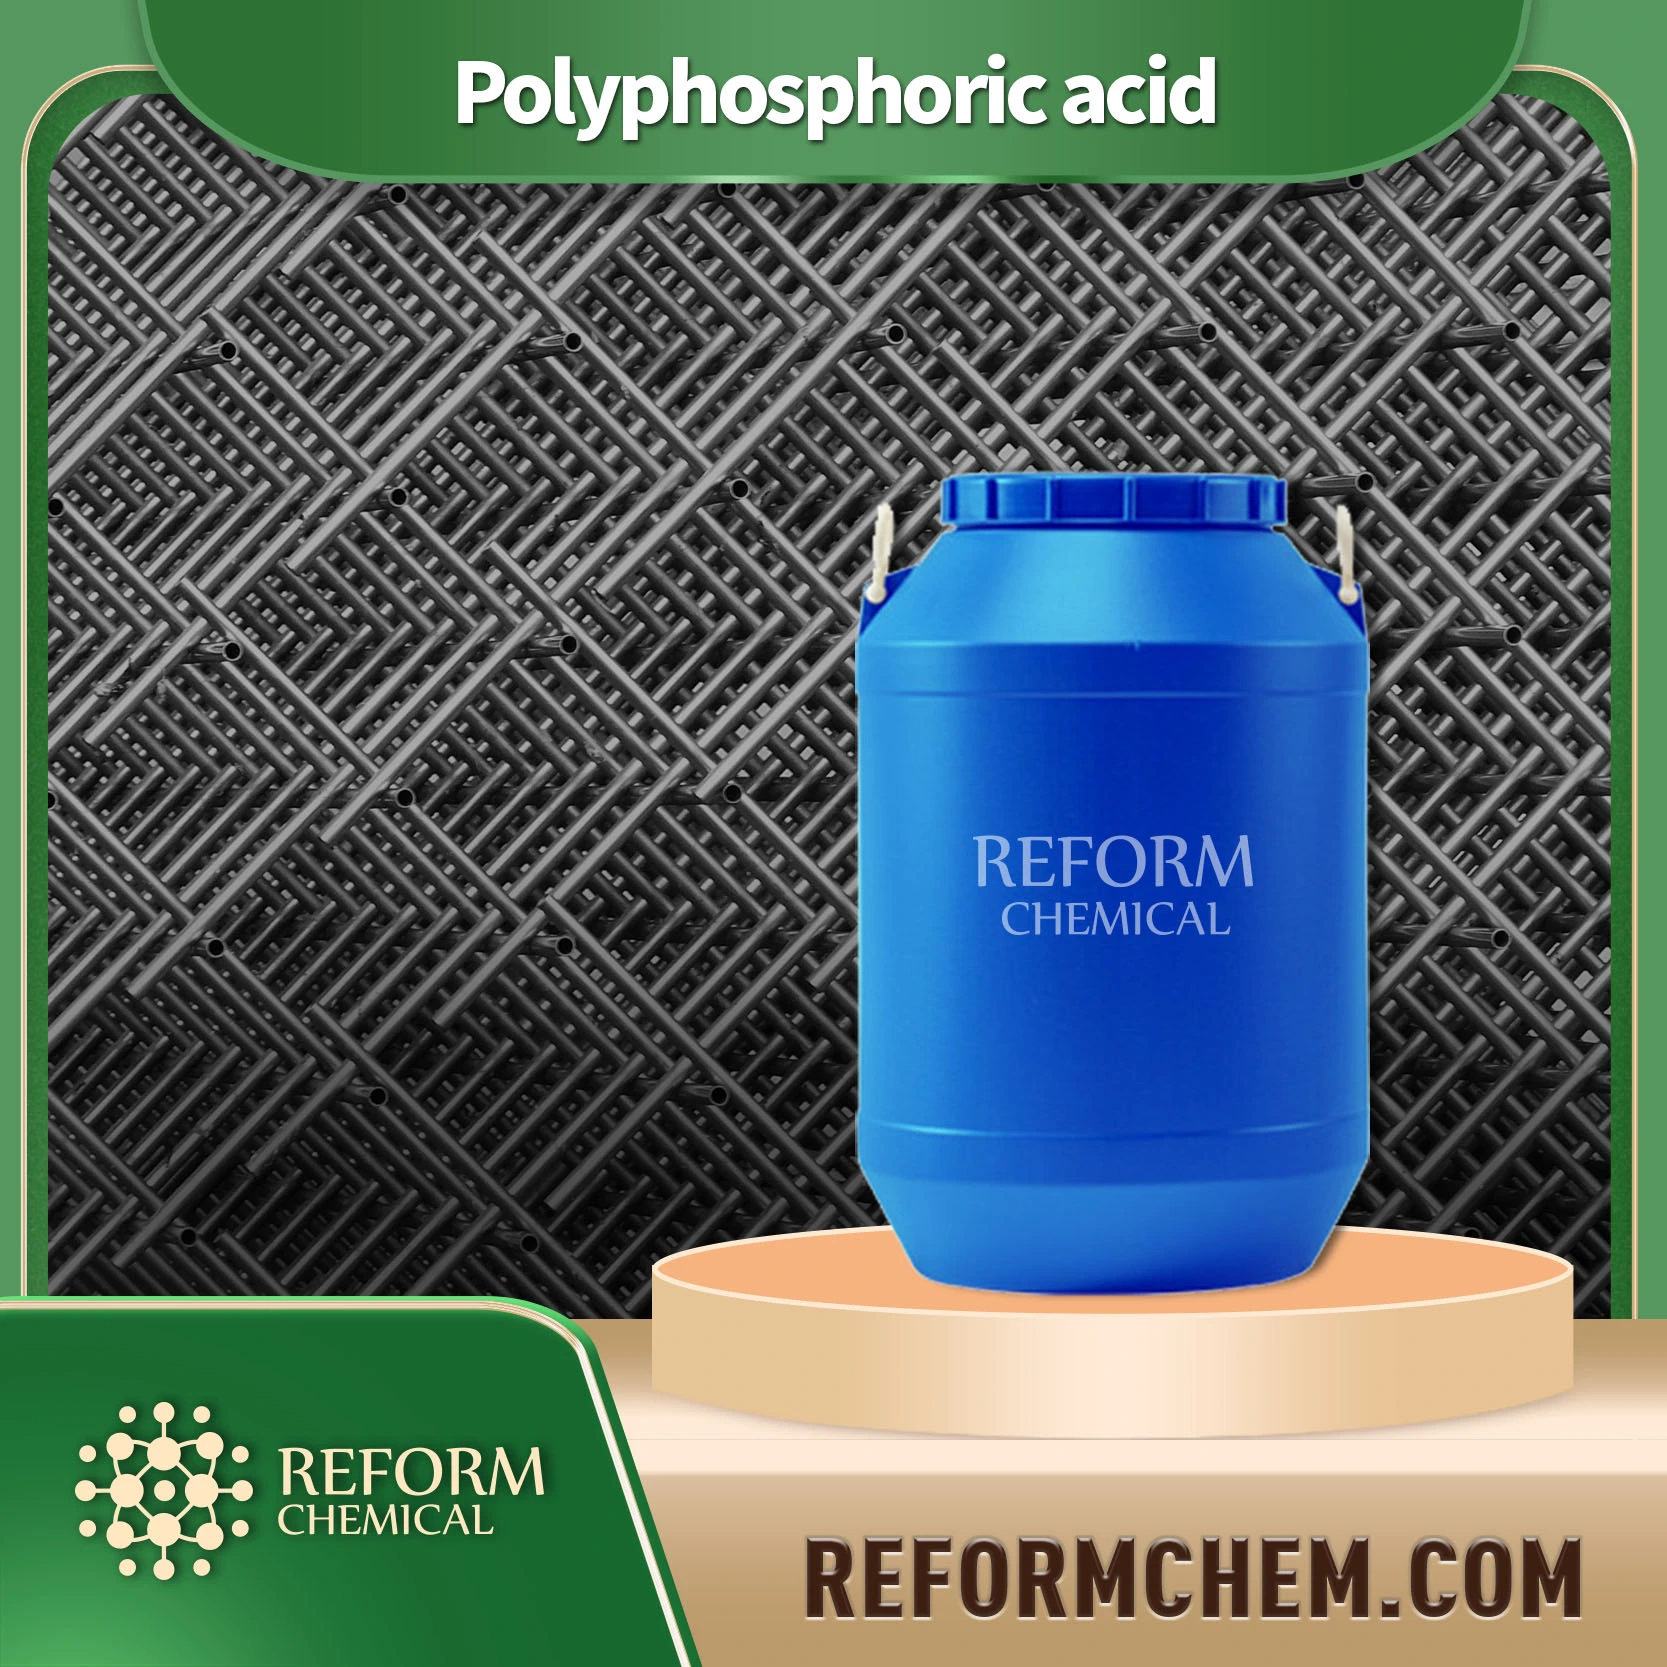 polyphosphoric acid8017 16 1